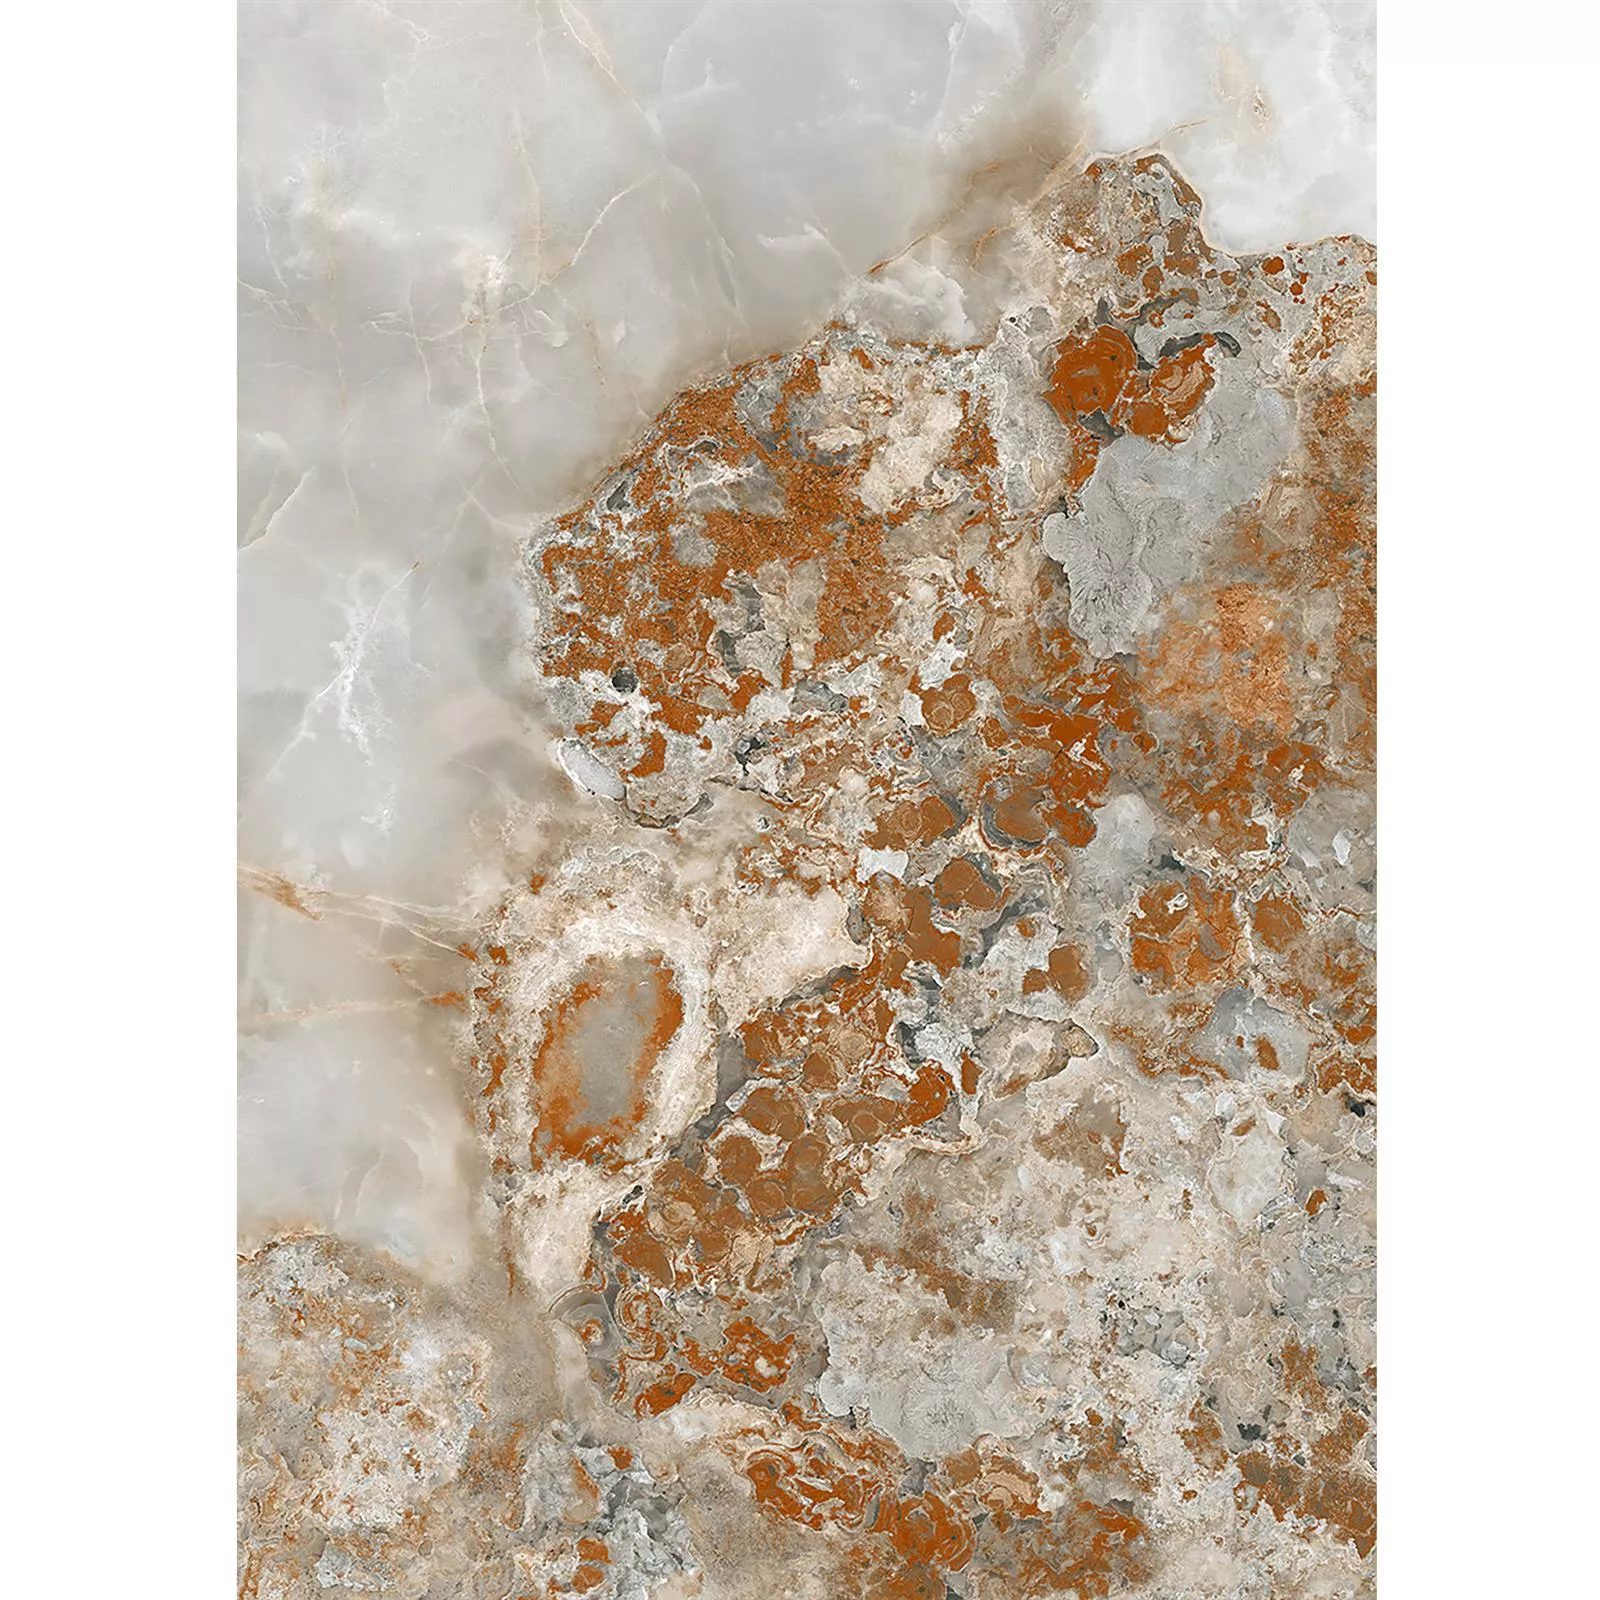 Vzorek Podlahová Dlaždice Naftalin Leštěná Hnědá Bílá 60x120cm